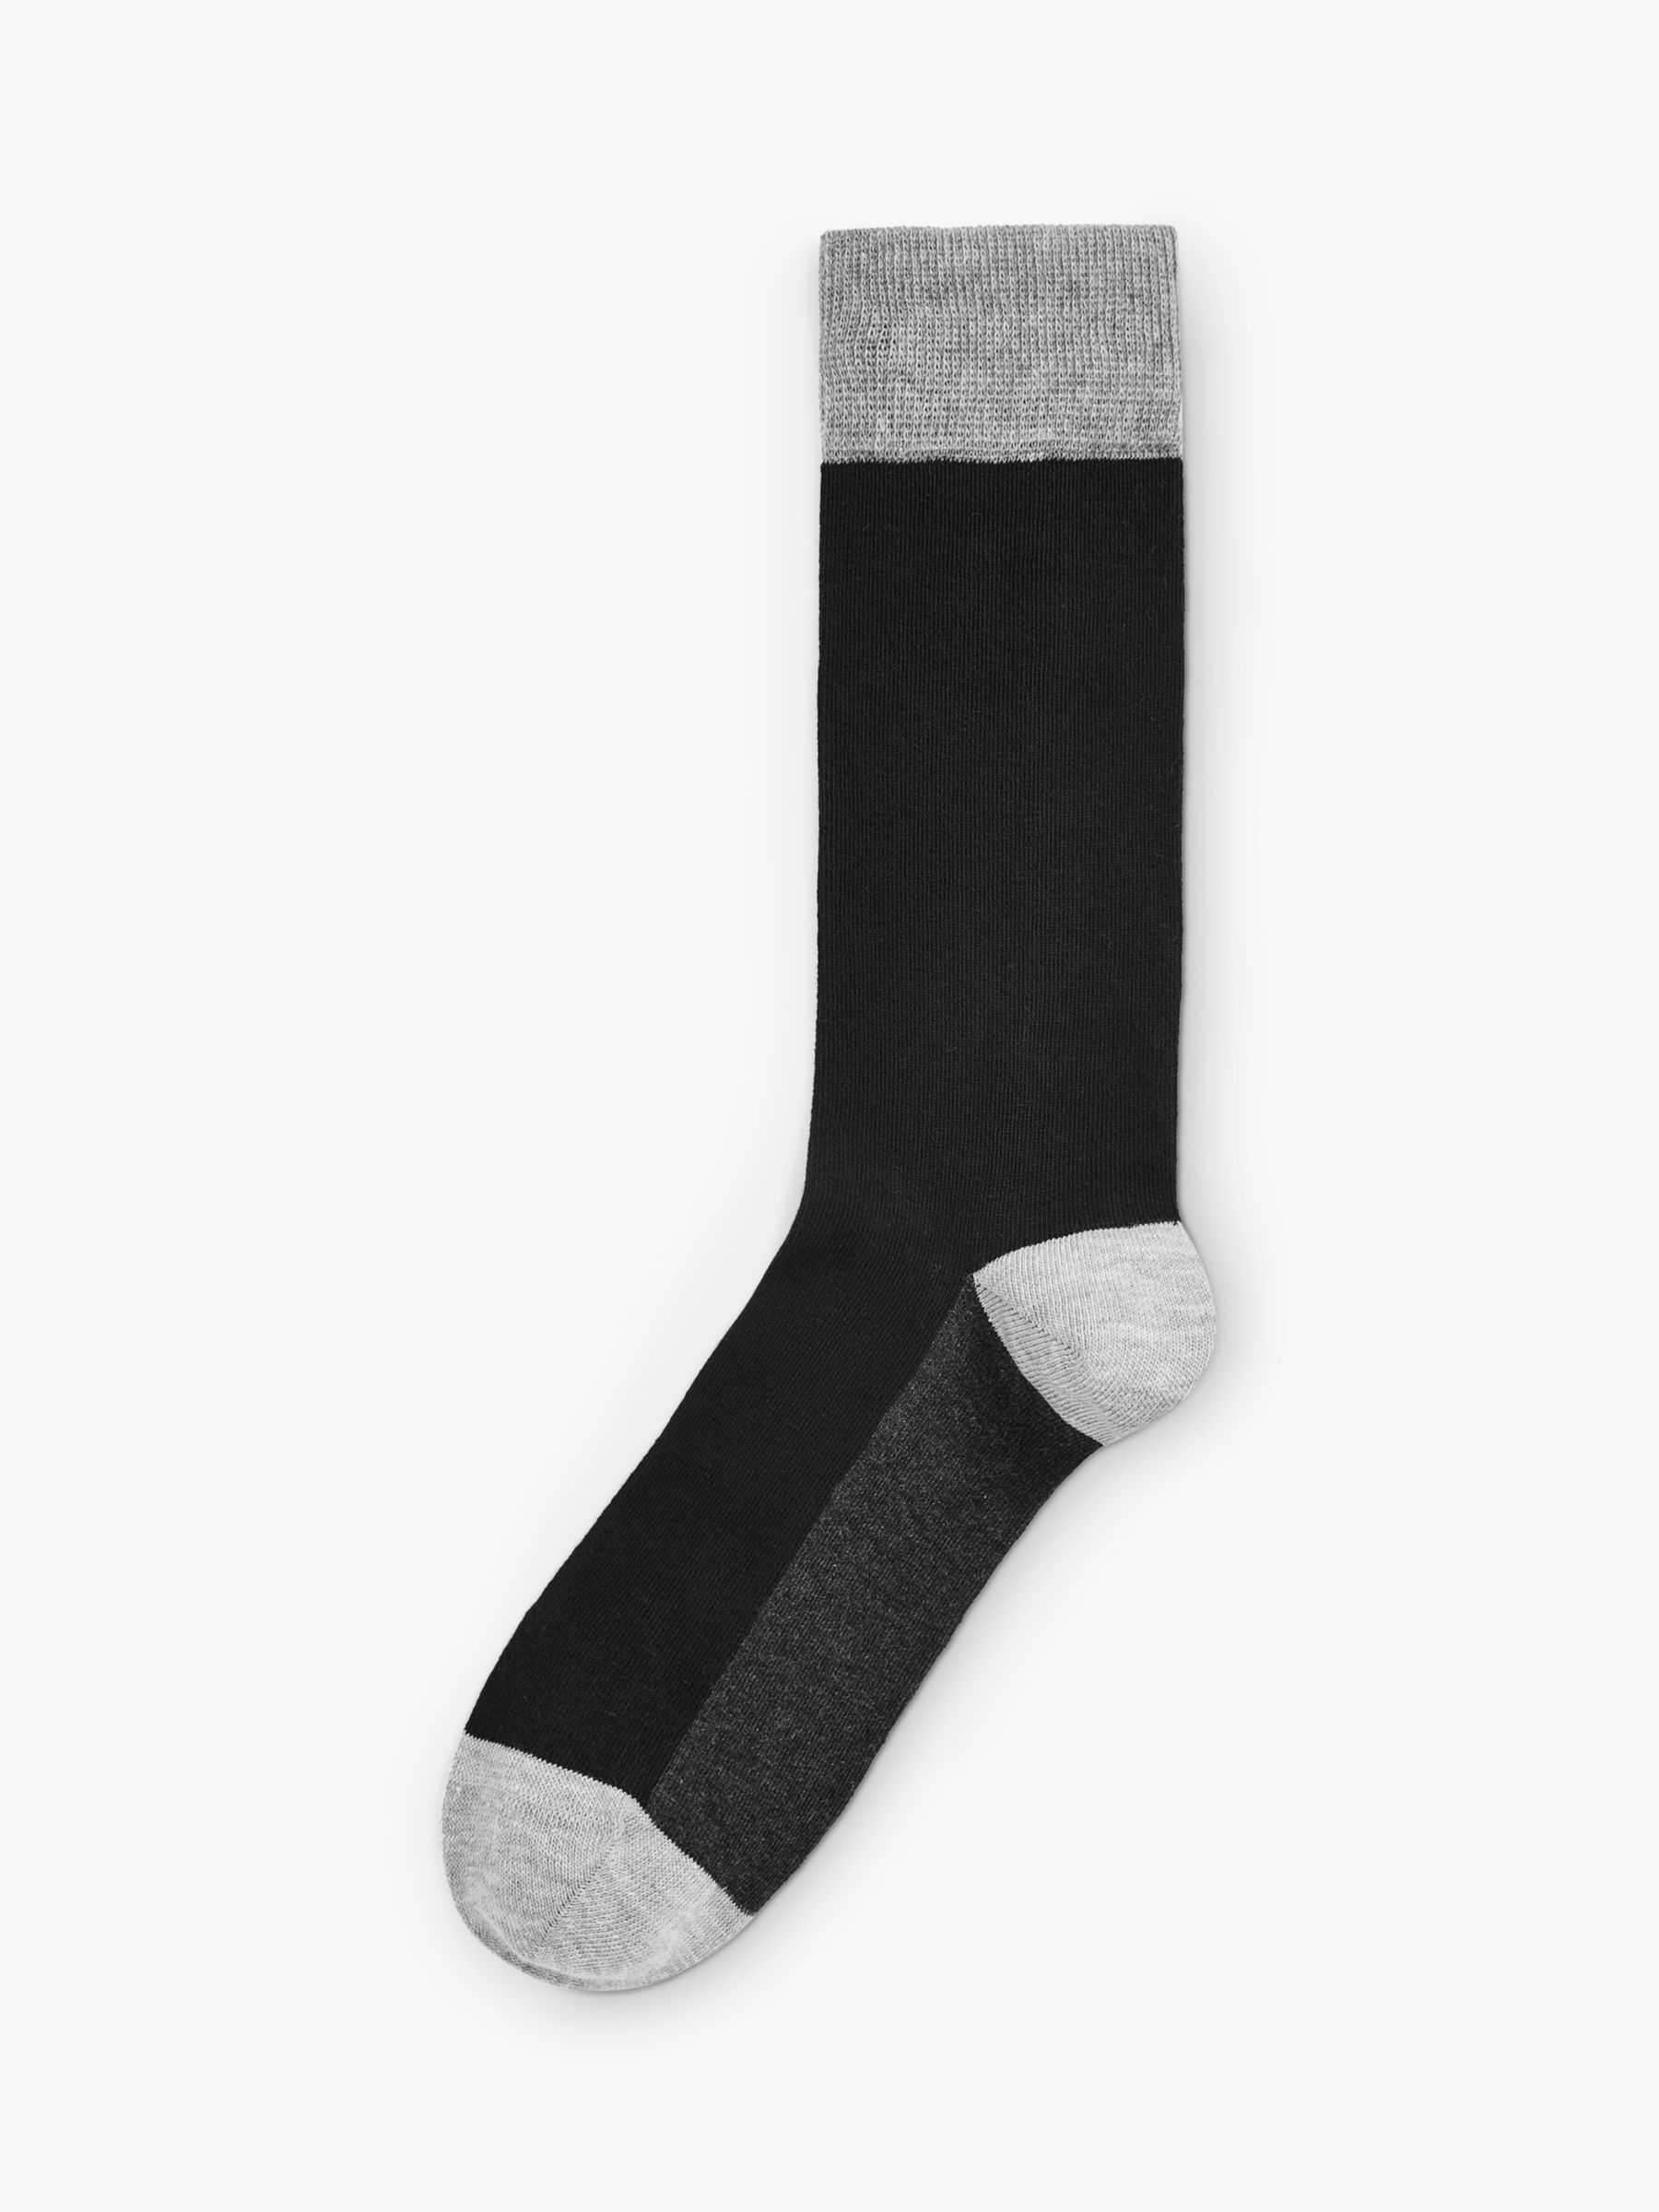 Buy Happy Socks Argyle & Dot Pattern Socks, Pack of 3, One Size Online at johnlewis.com